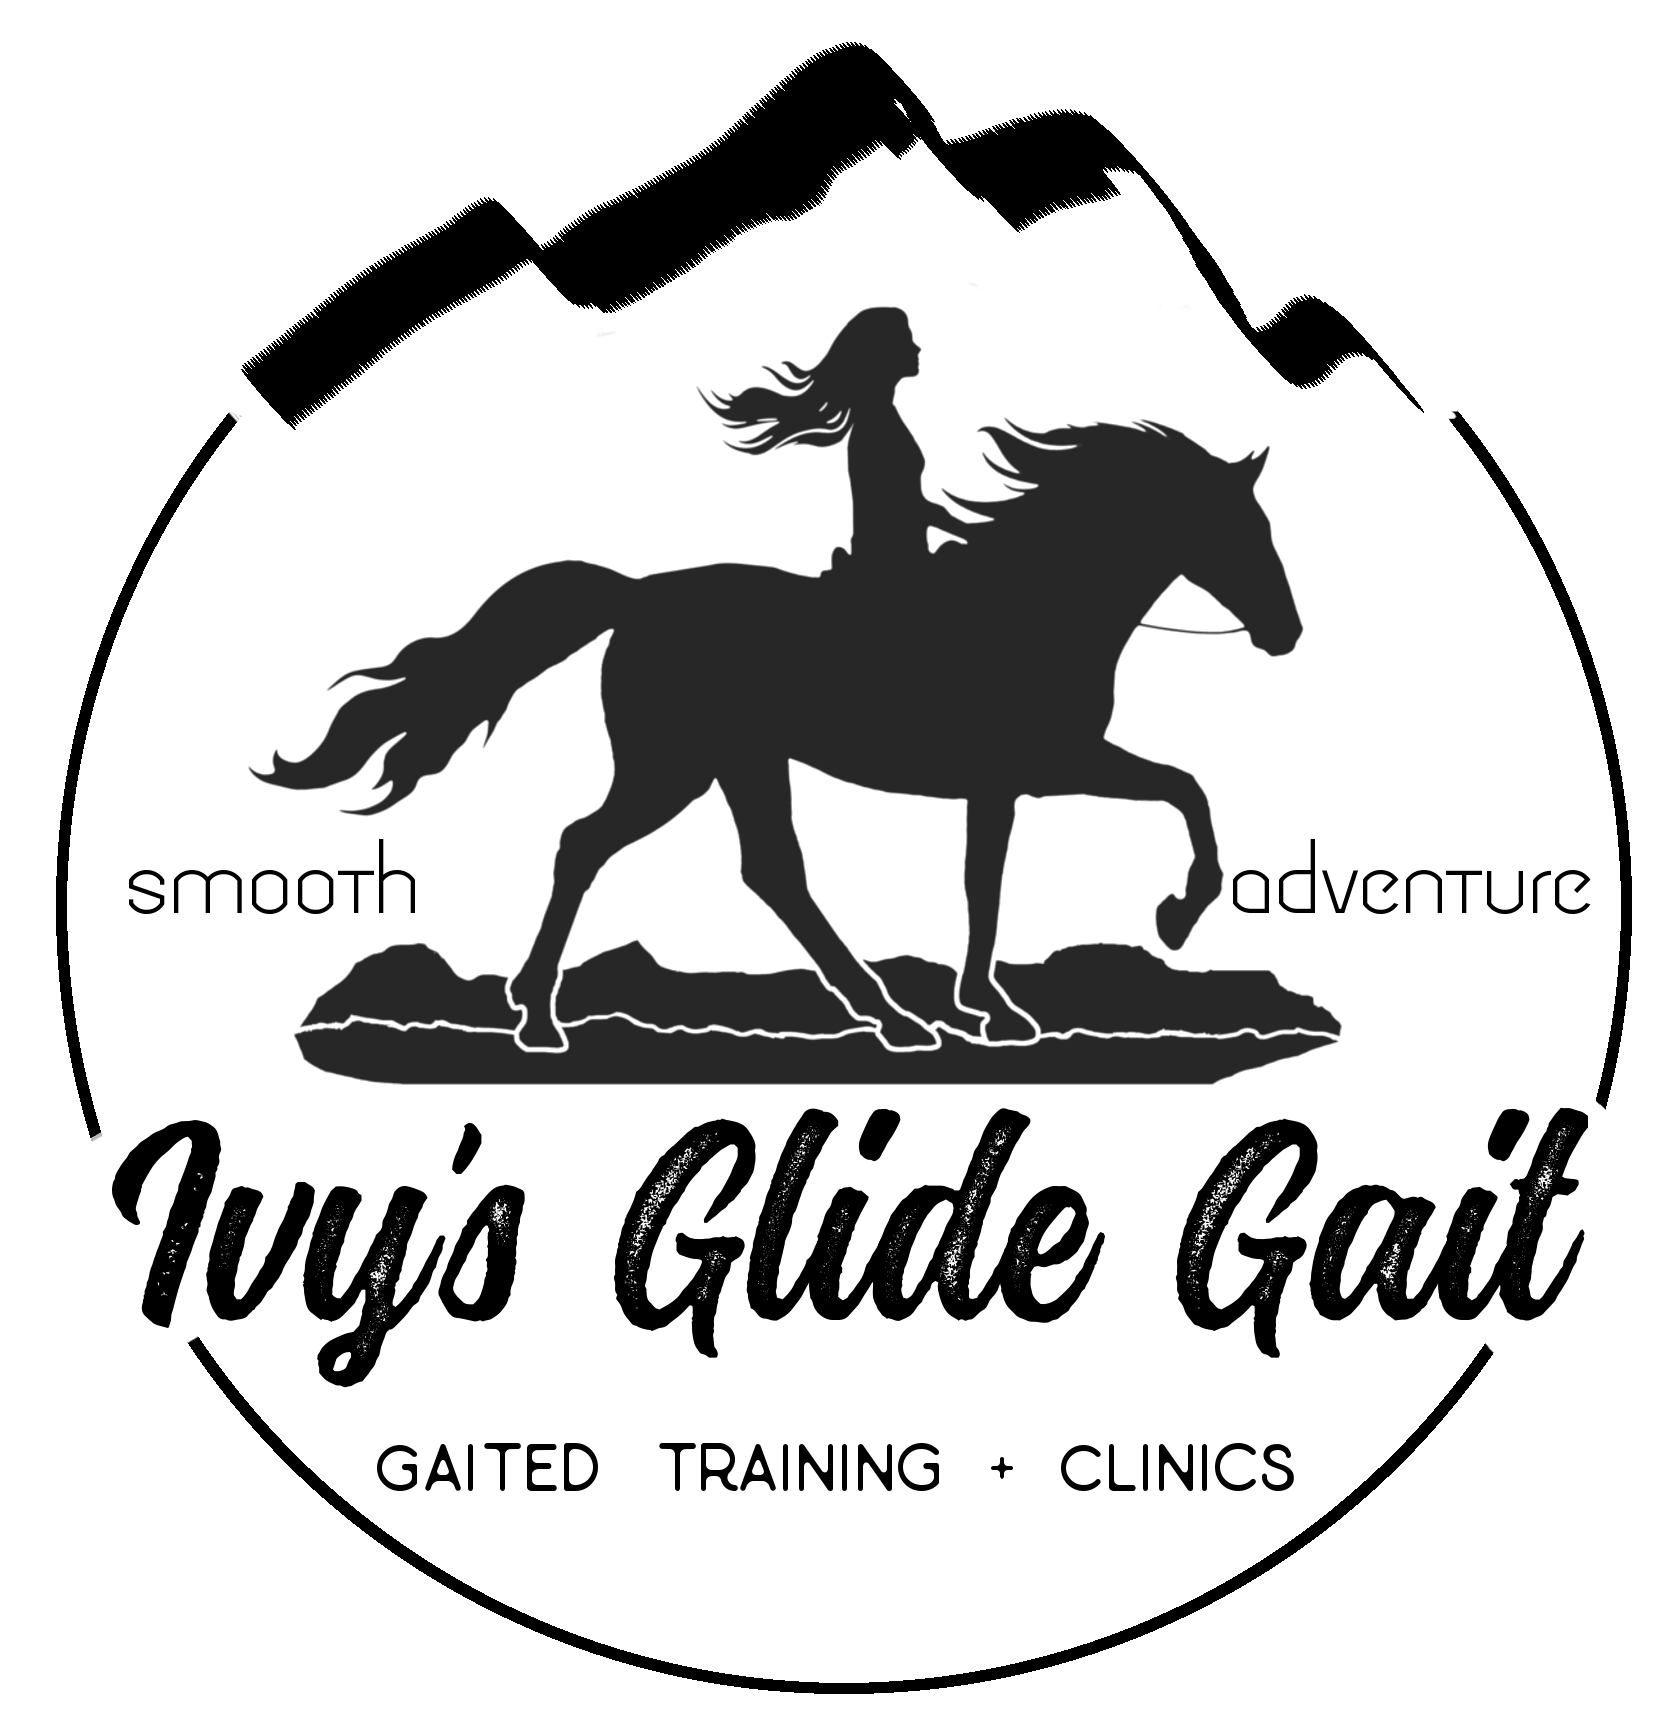 horse back gaited riding logo "Ivy's glide gait"